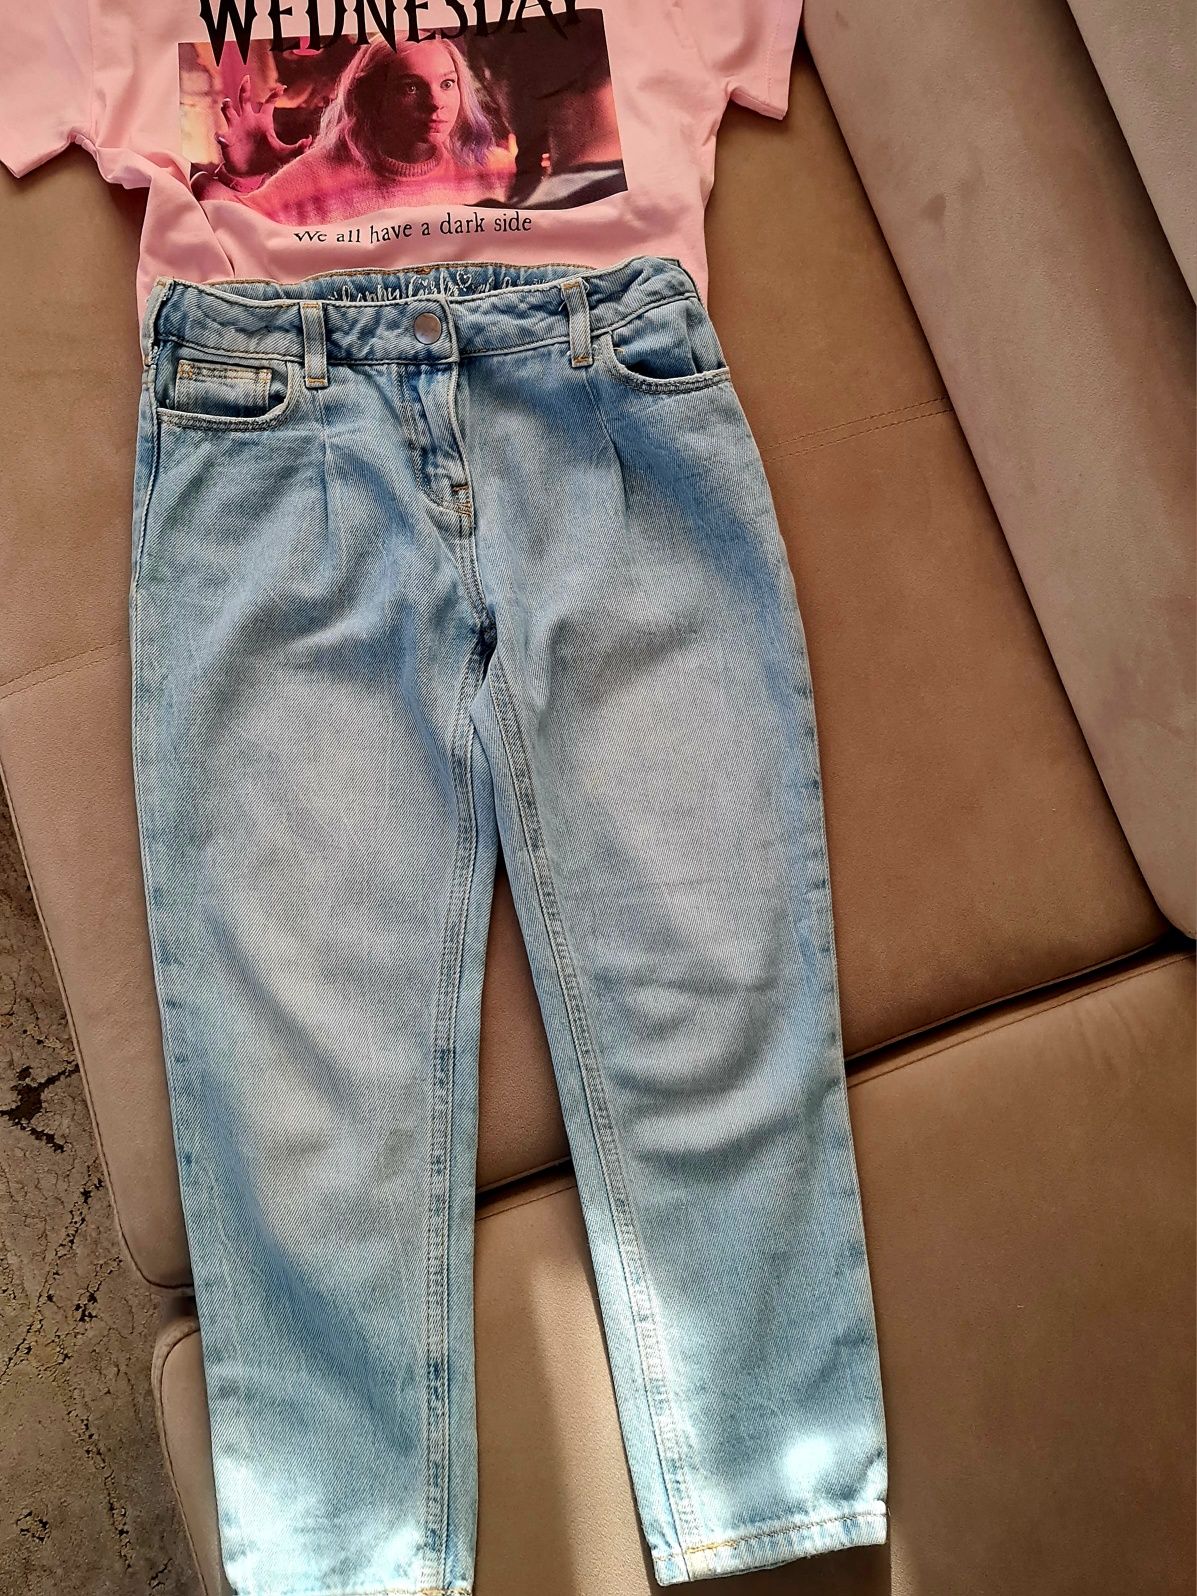 Pantaloni blugi, Zara fetite marimea 116cm-122